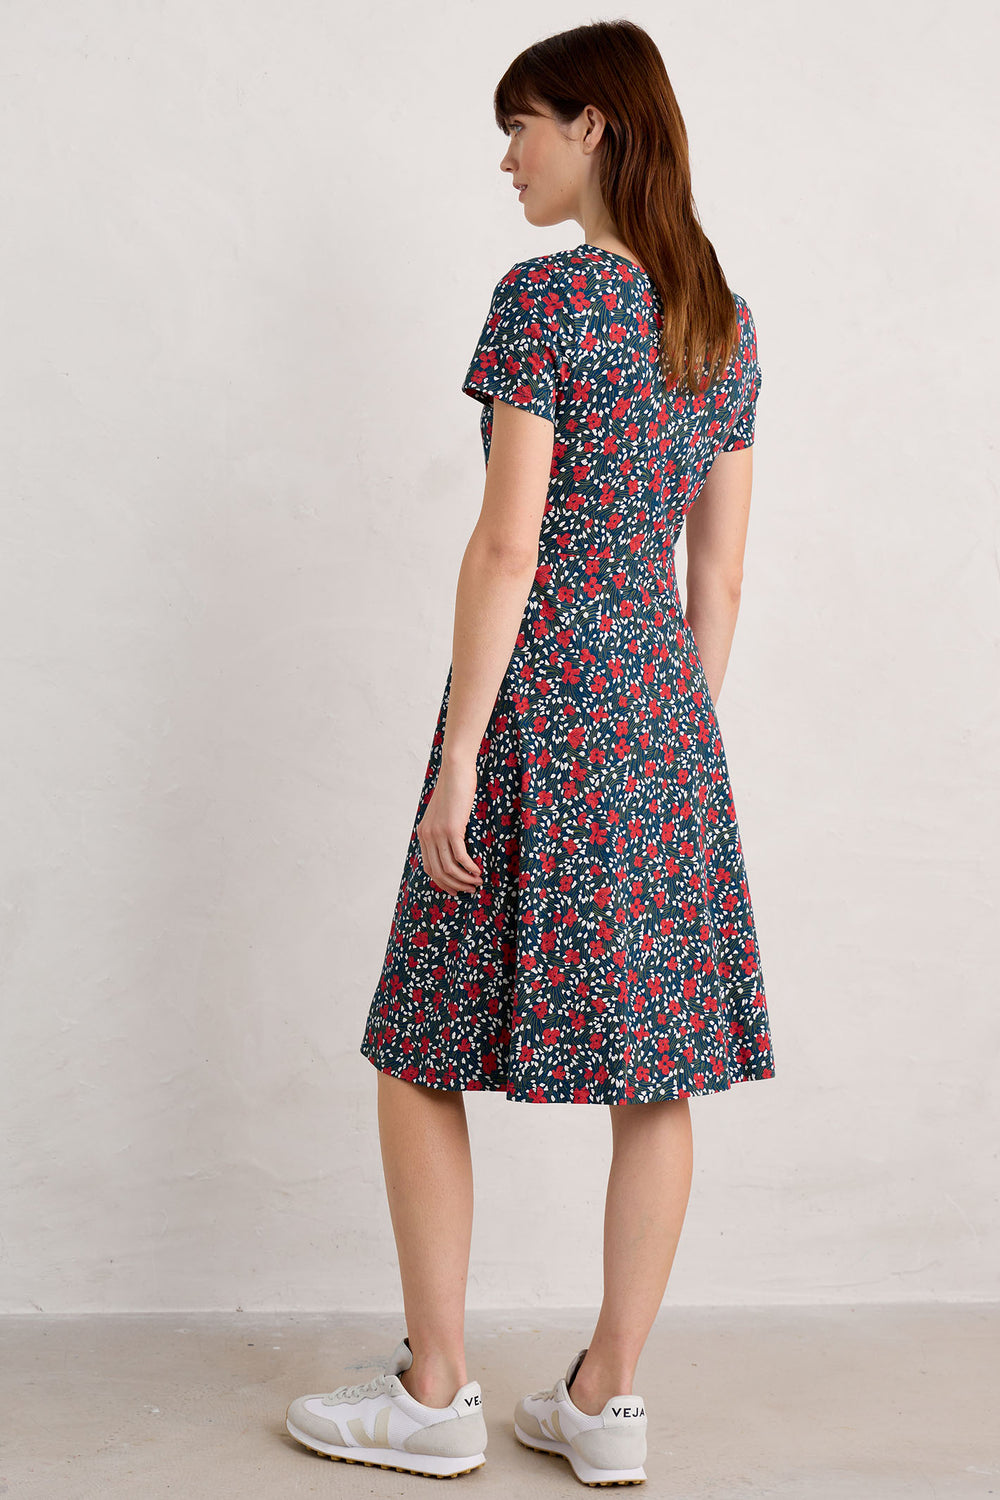 Seasalt WM24118 April Blue Reed Flower Raincloud Print Dress - Shirley Allum Boutique